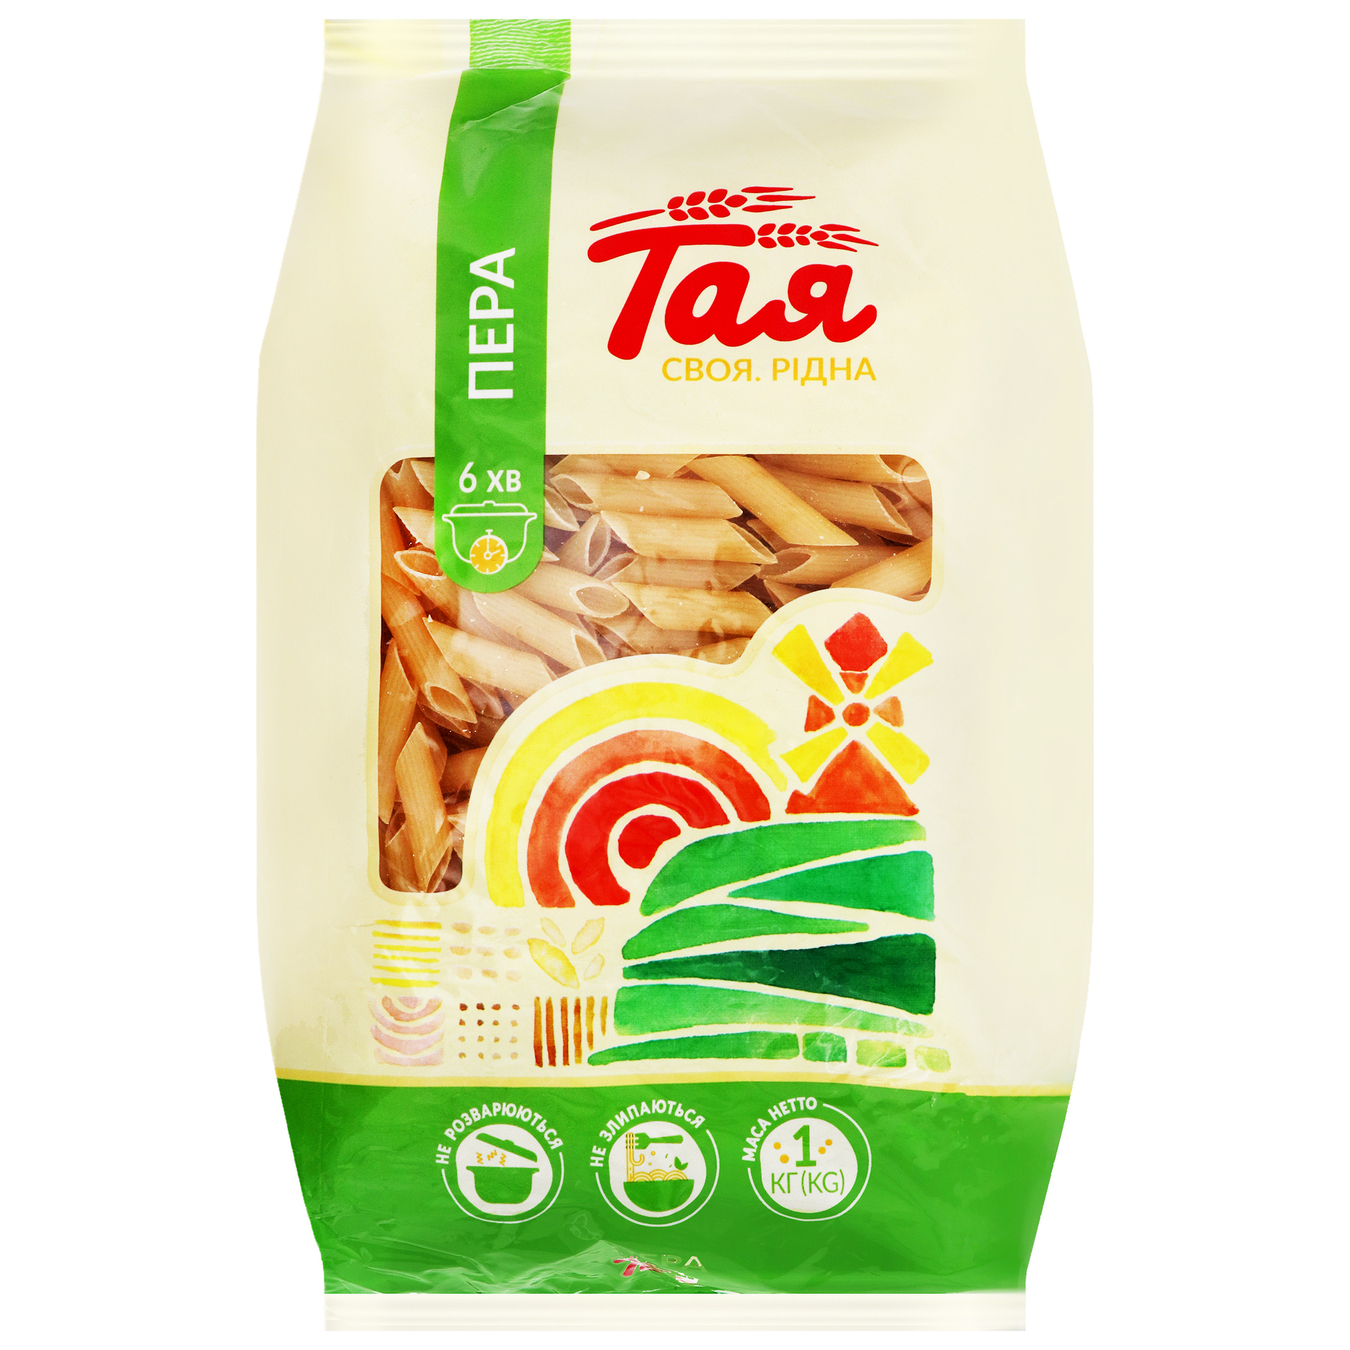 Taya Pera pasta products 1 kg